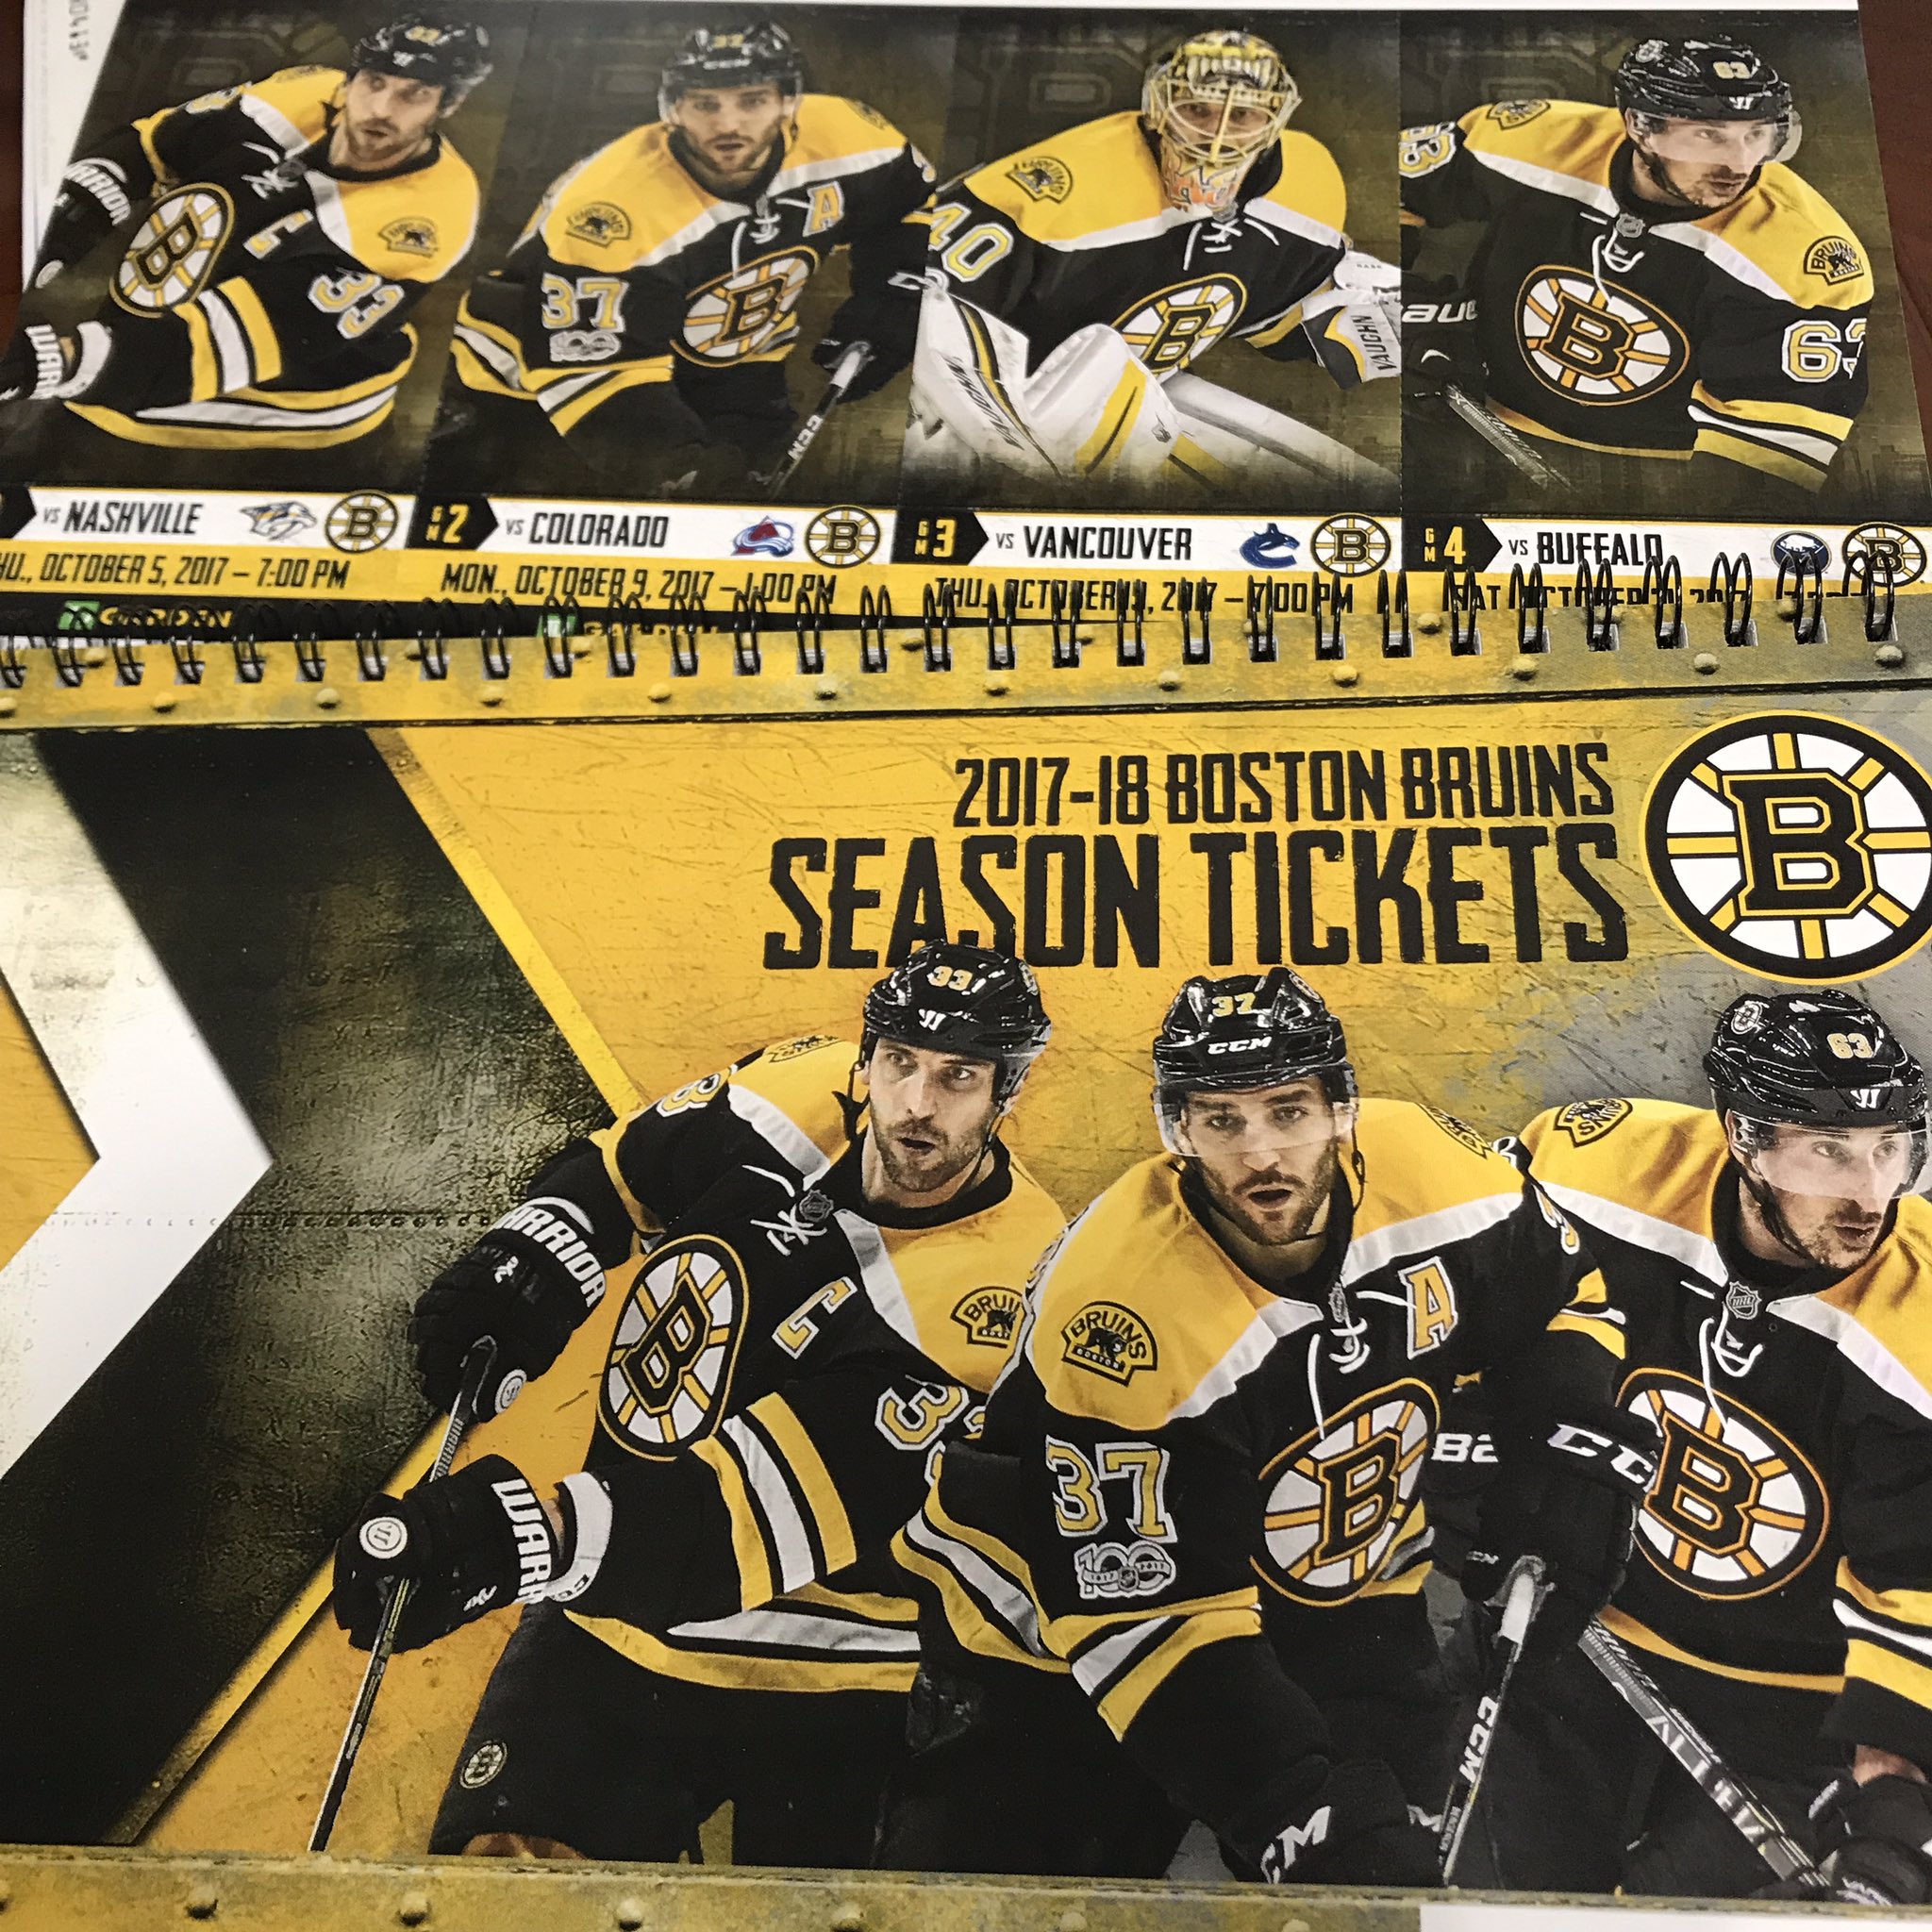 Boston Bruins Ticket Giveaway